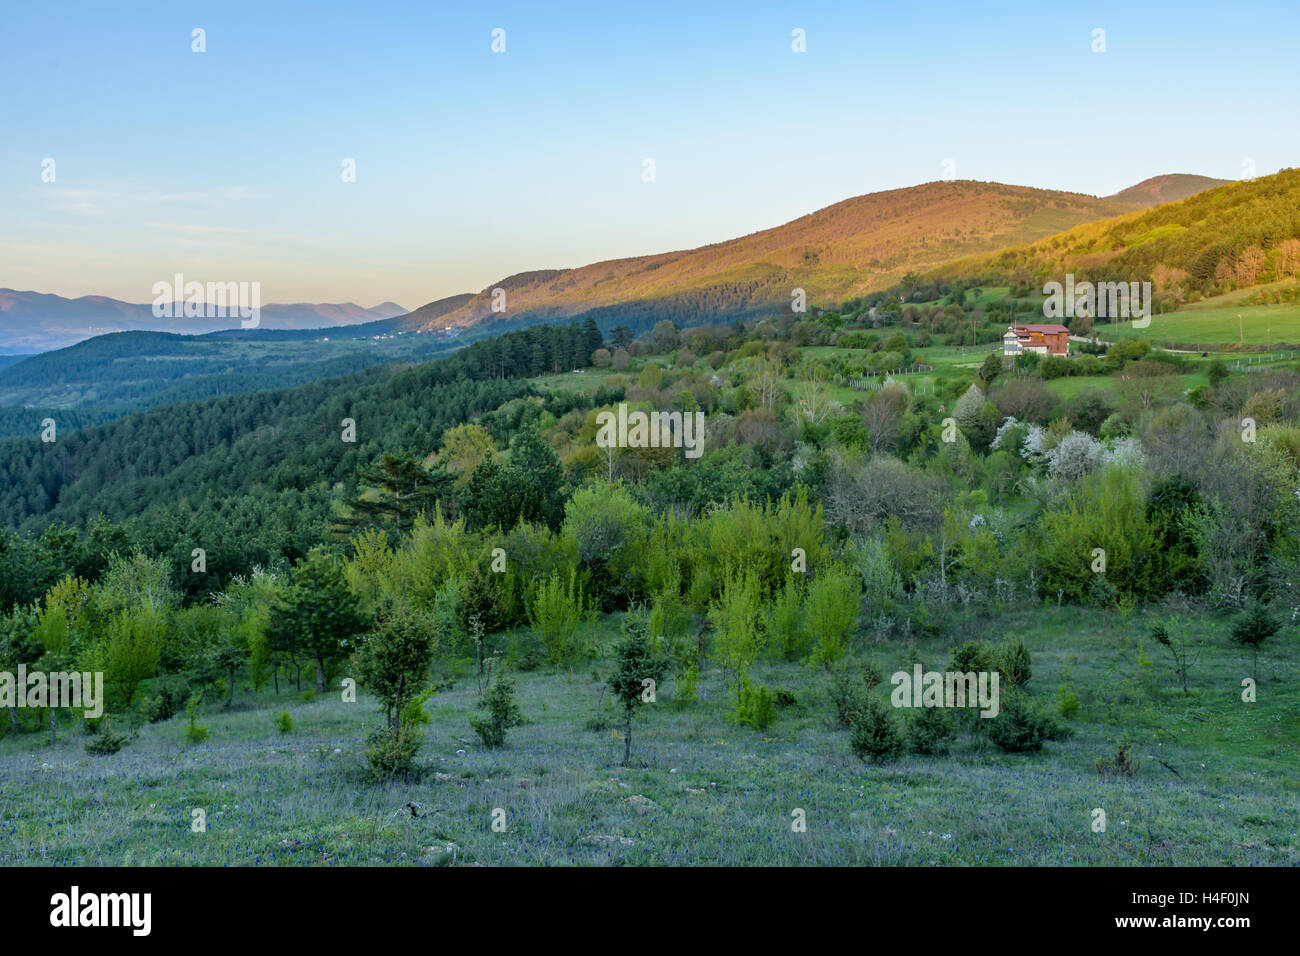 A village landscape from Turkey. Stock Photo